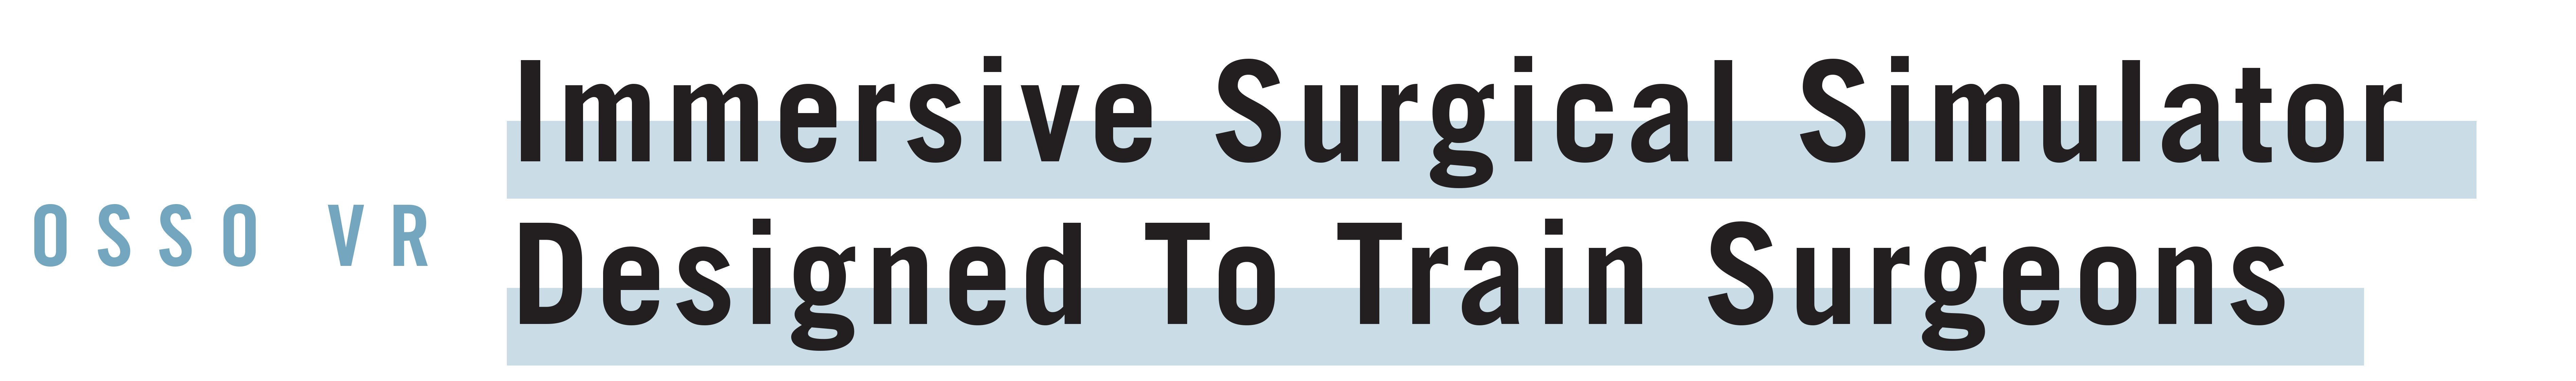 Surgical Simulator Will Train Surgeons